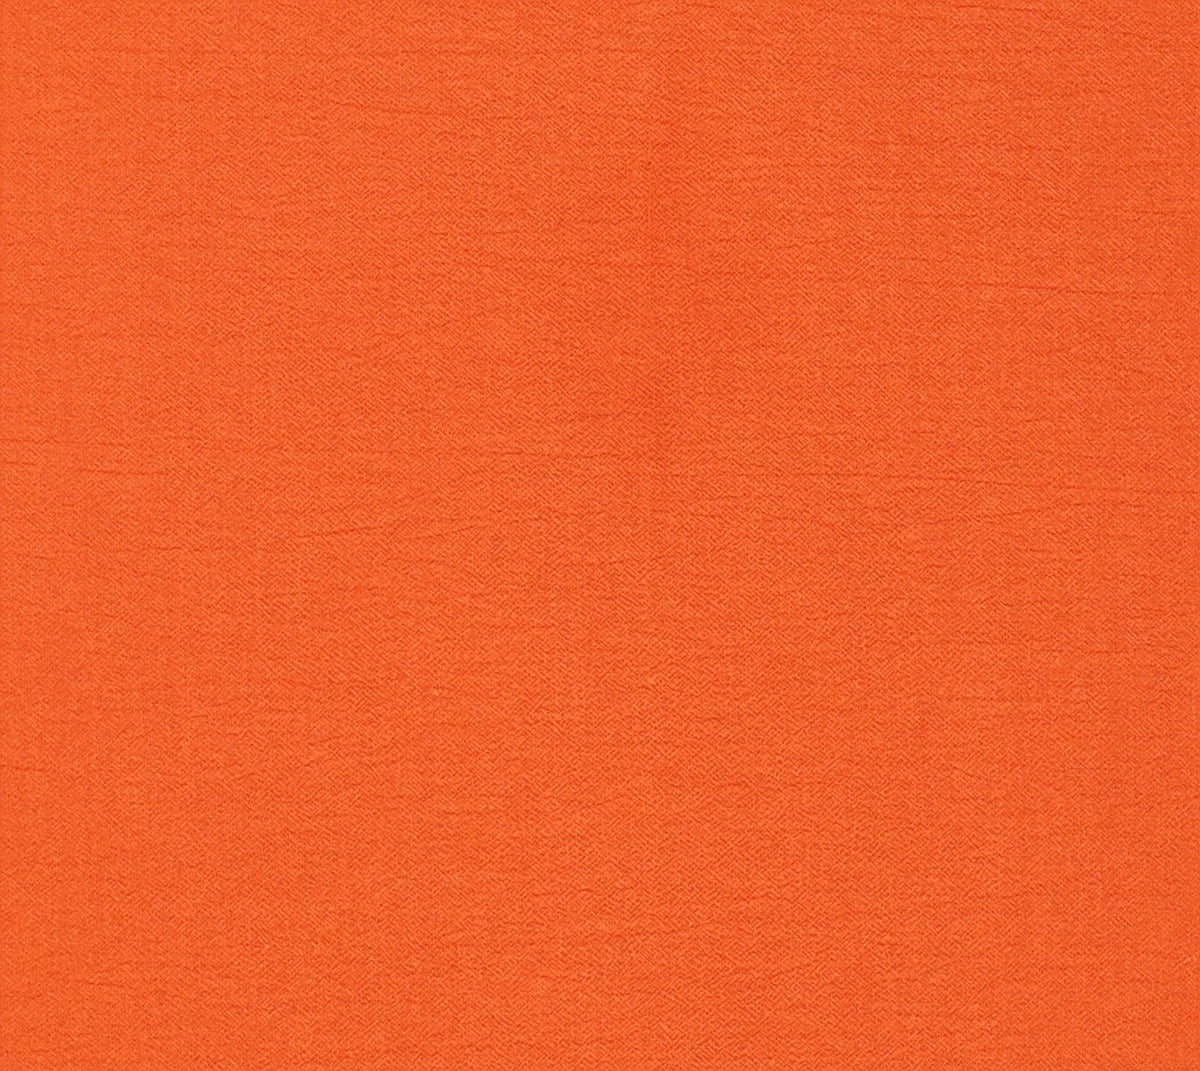 Night curtain orange uni night